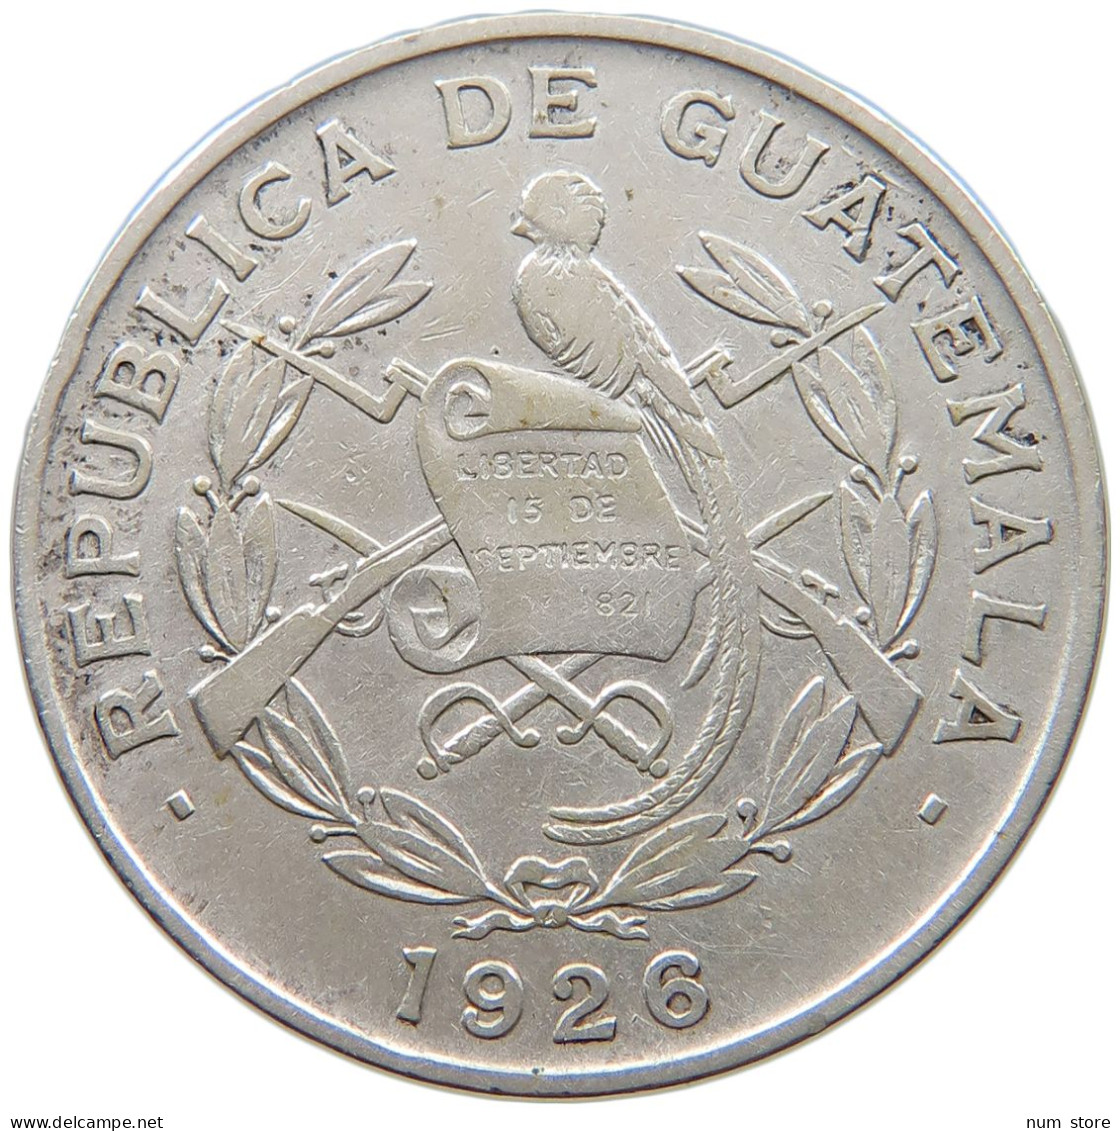 GUATEMALA 1/4 QUETZAL 1926  #t135 0241 - Guatemala